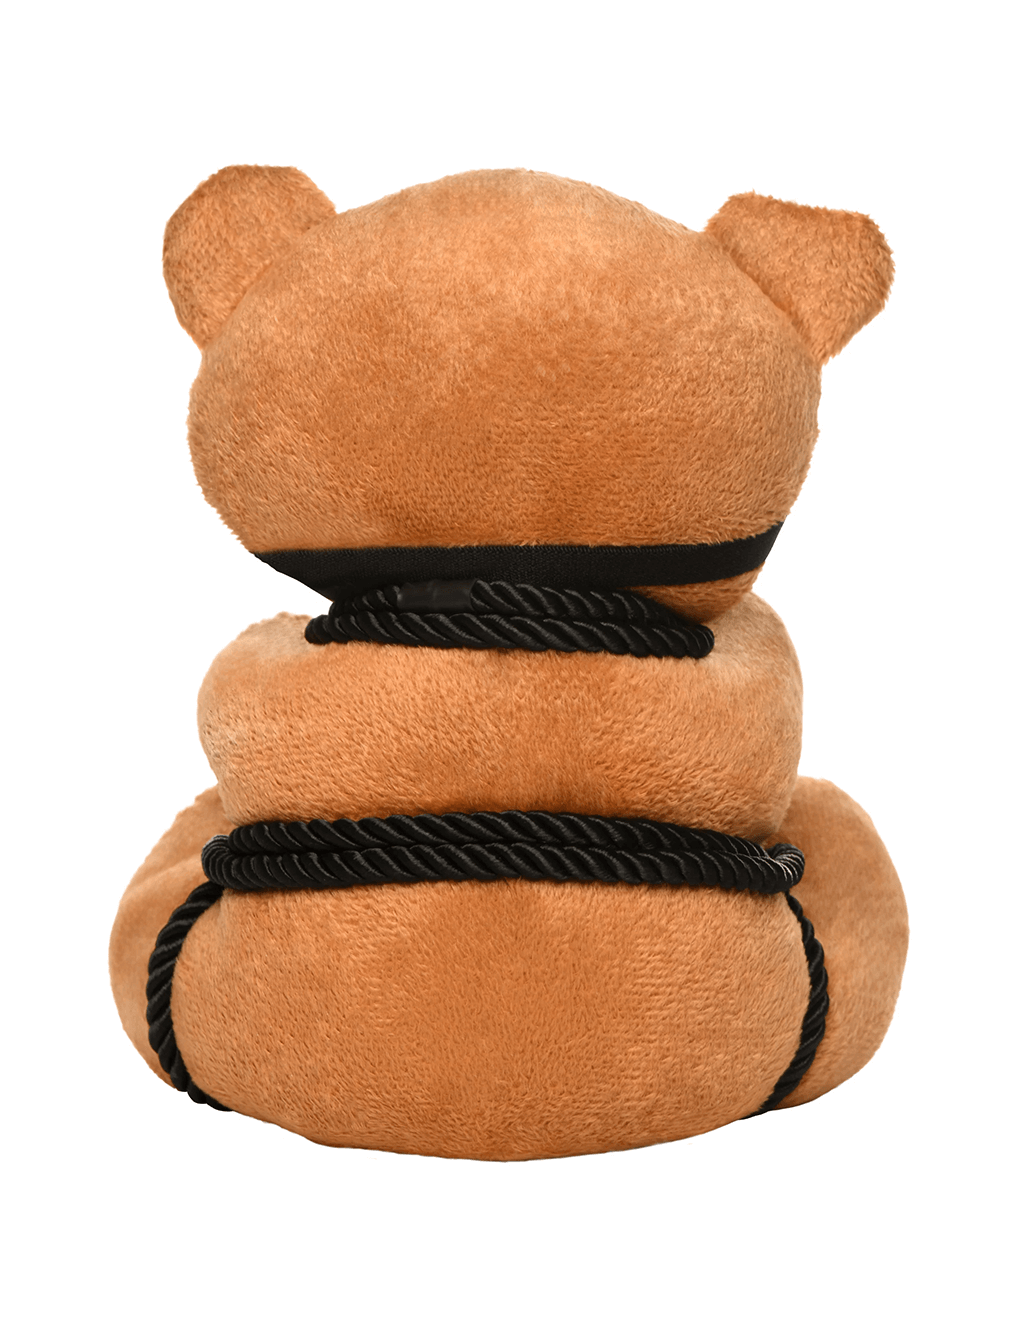 Rope Teddy Bear